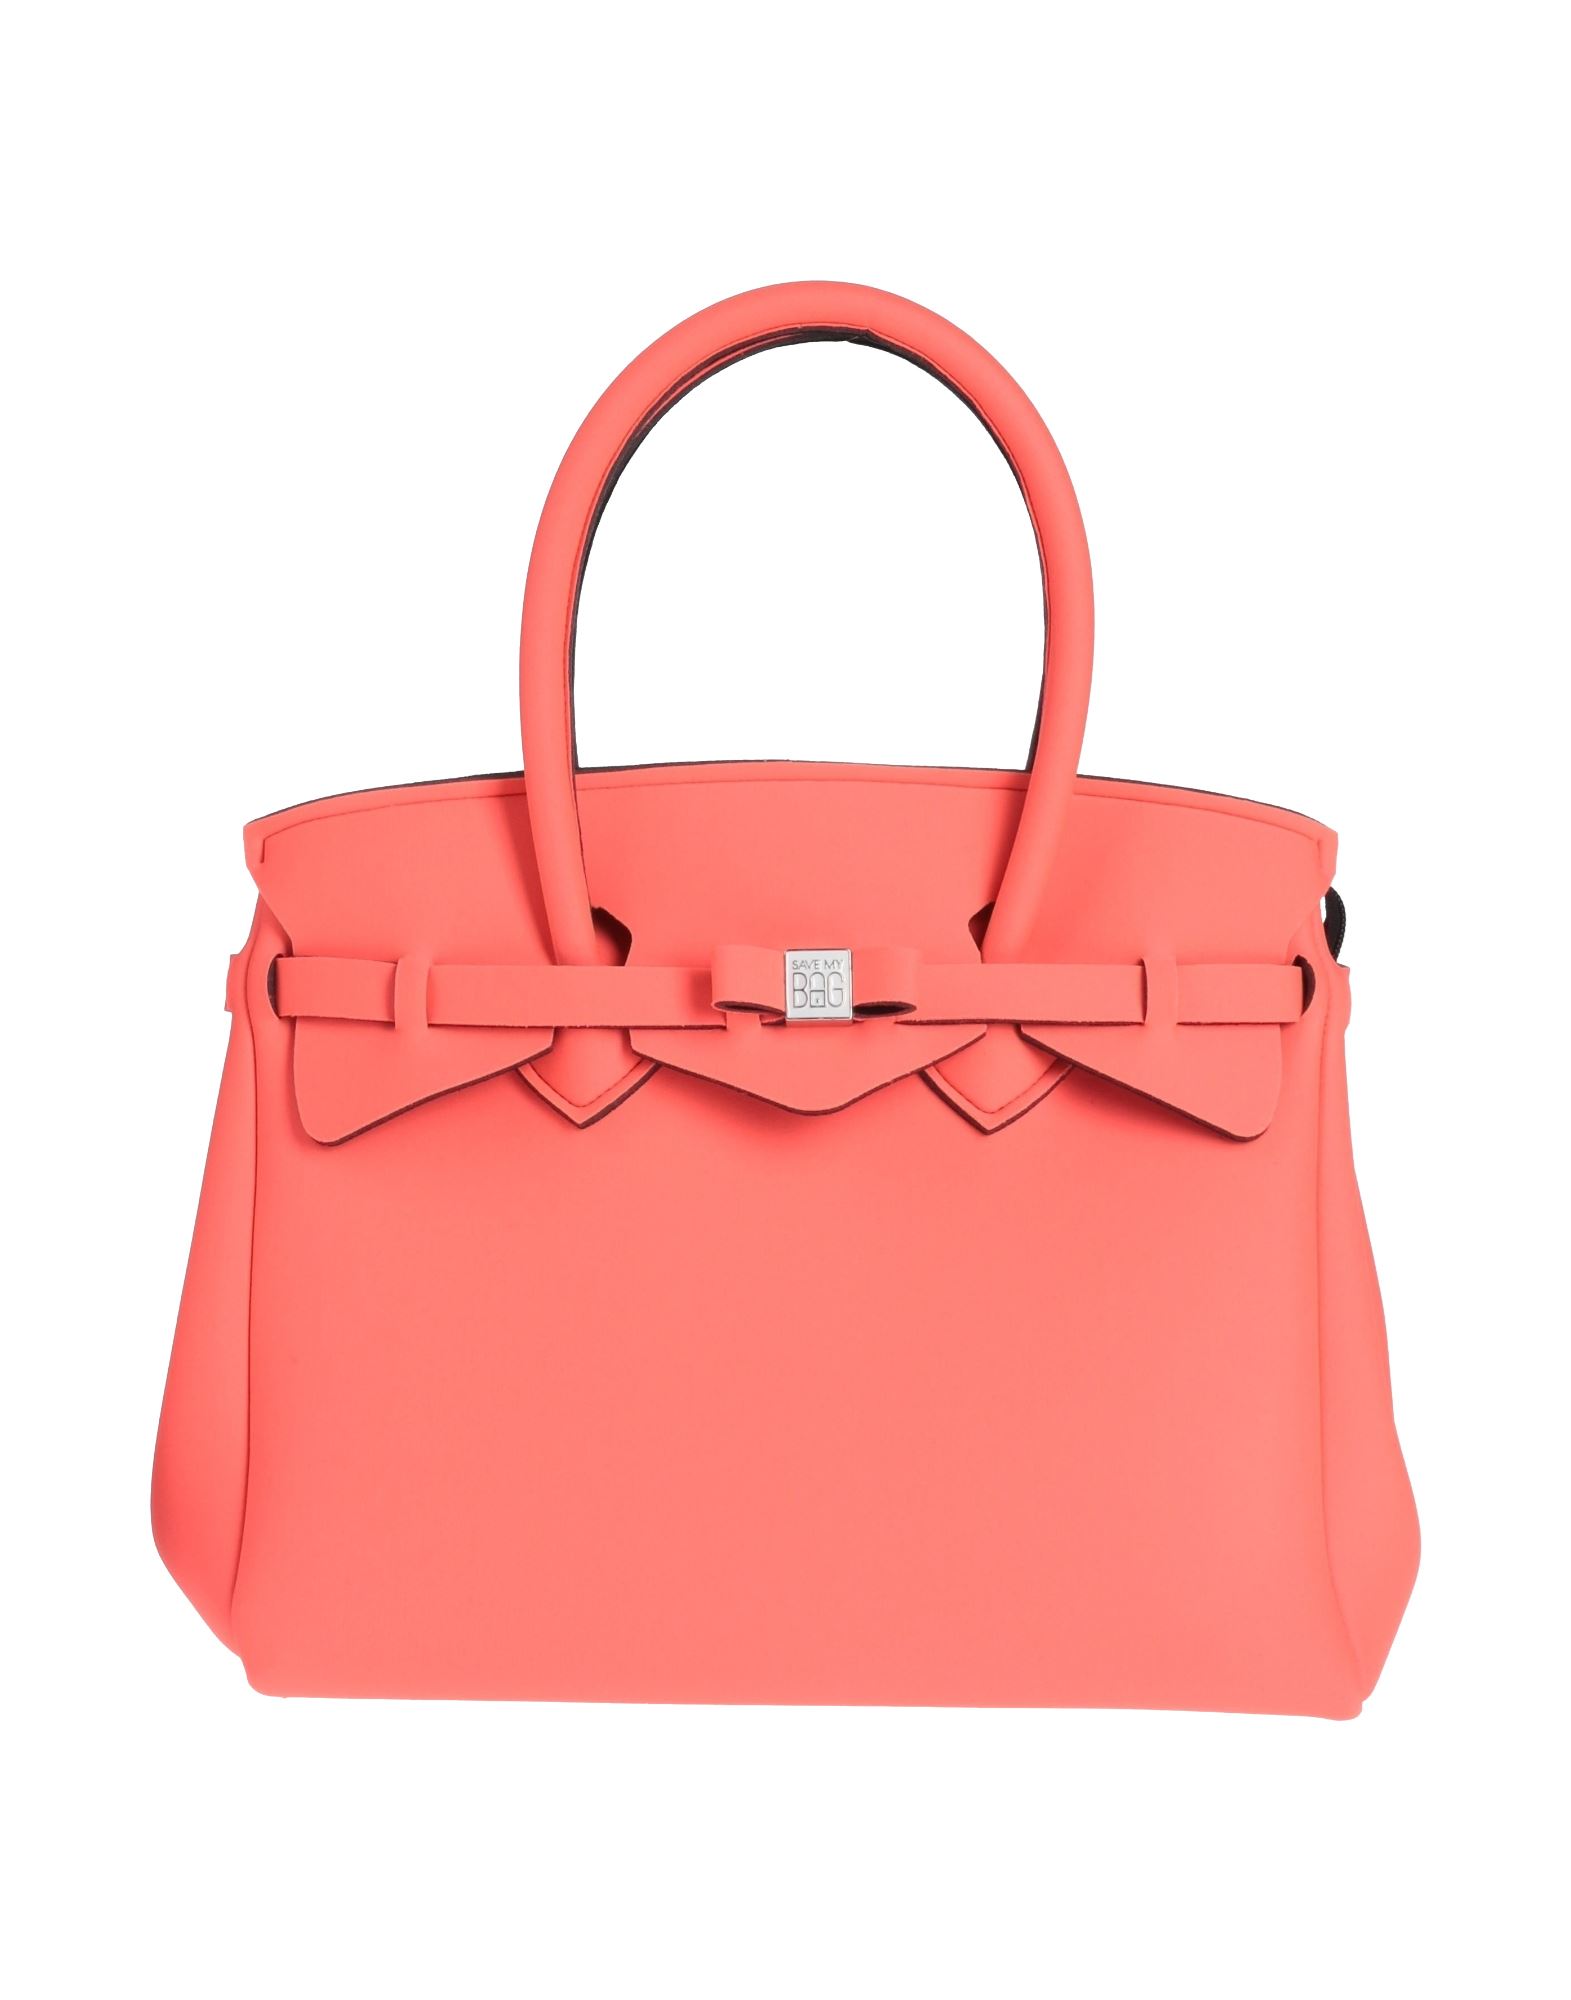 Save My Bag Handbags In Pink